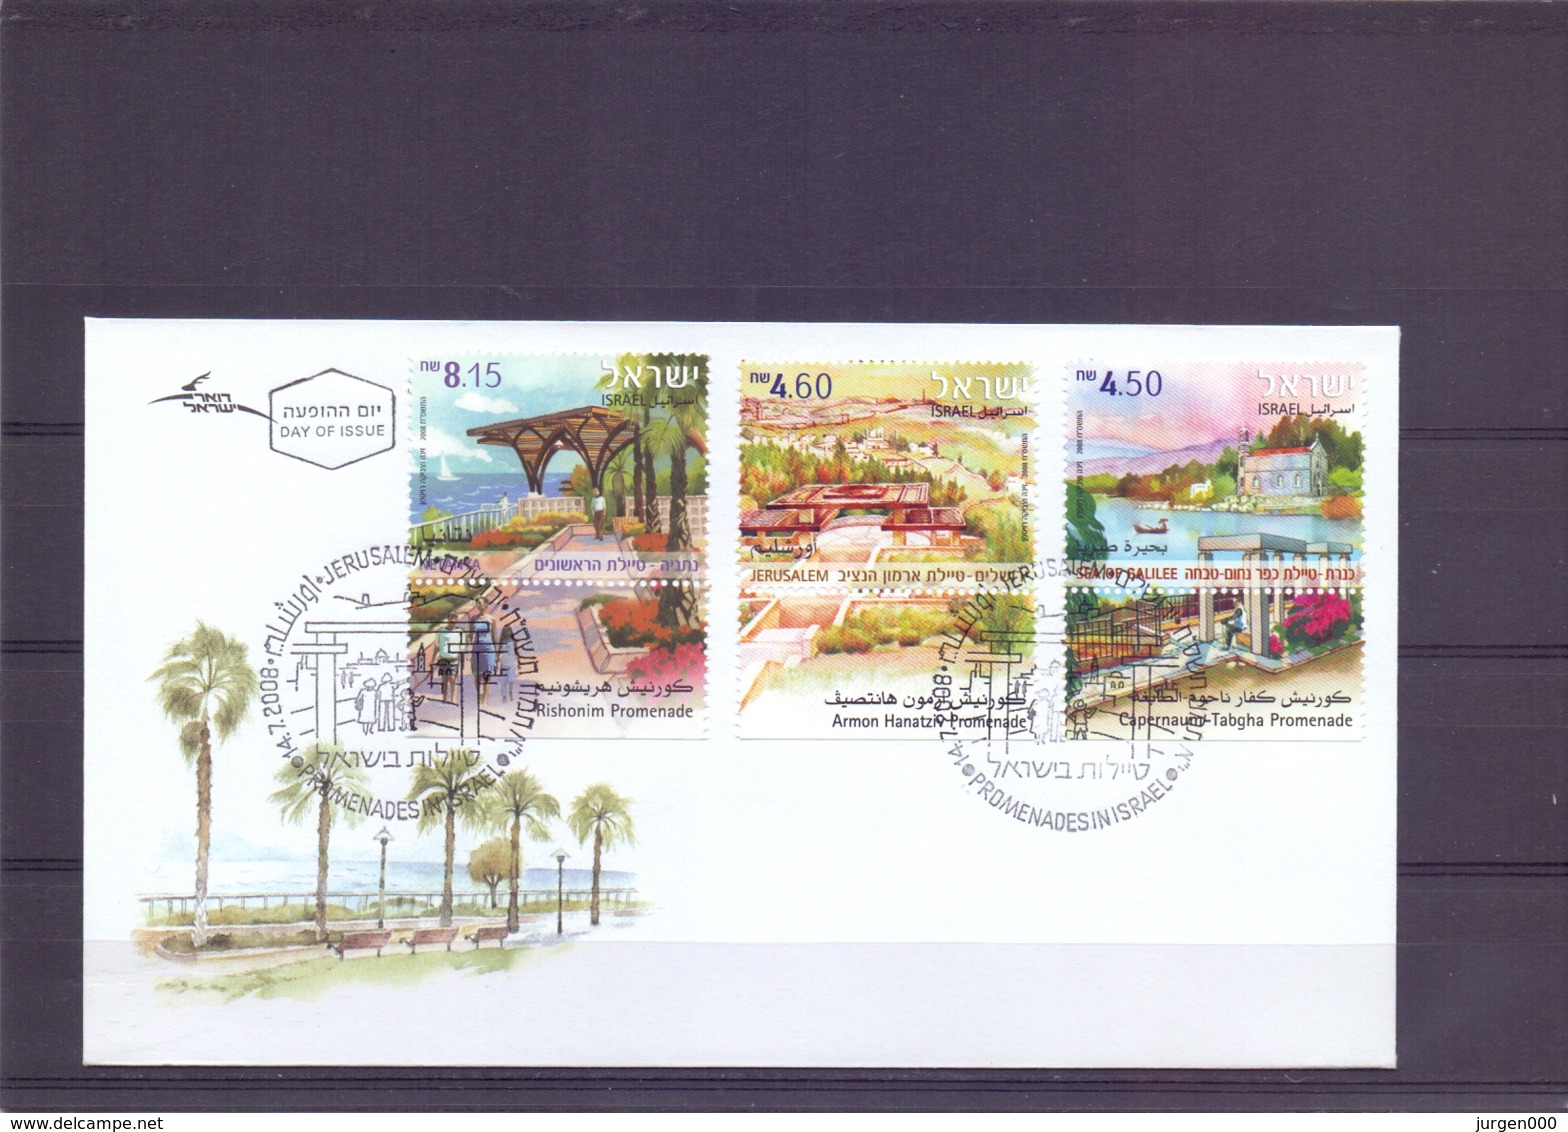 Israel - FDC - Promenades- Michel 2001/03  - Jerusalem  14/7/20008   (RM14868) - Briefe U. Dokumente